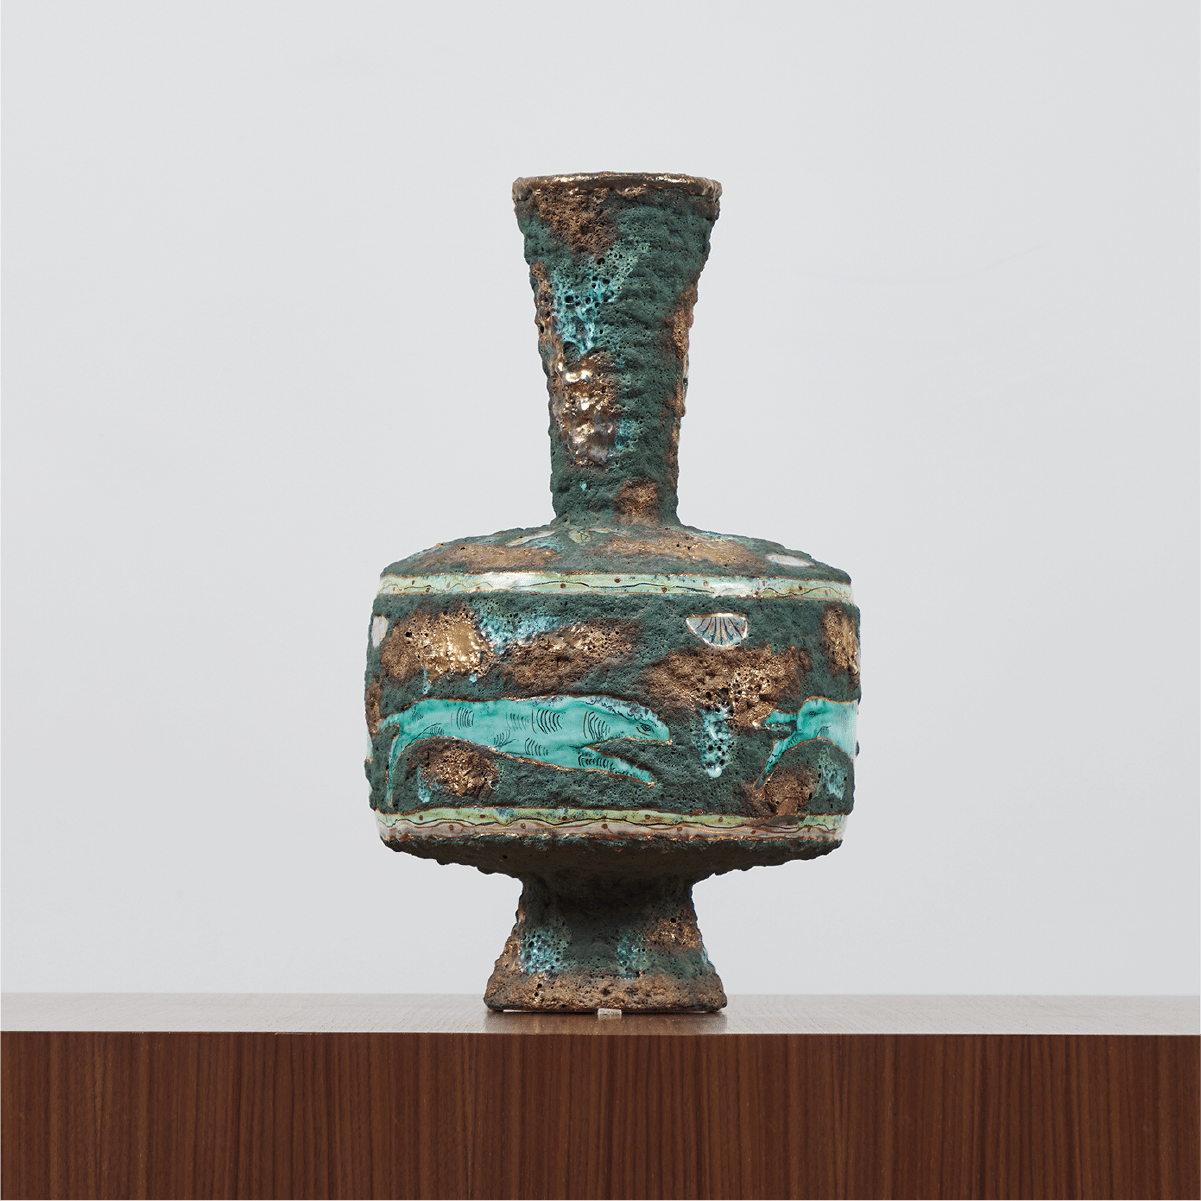 Low res for web_Ceramic Vase with Sea Motif